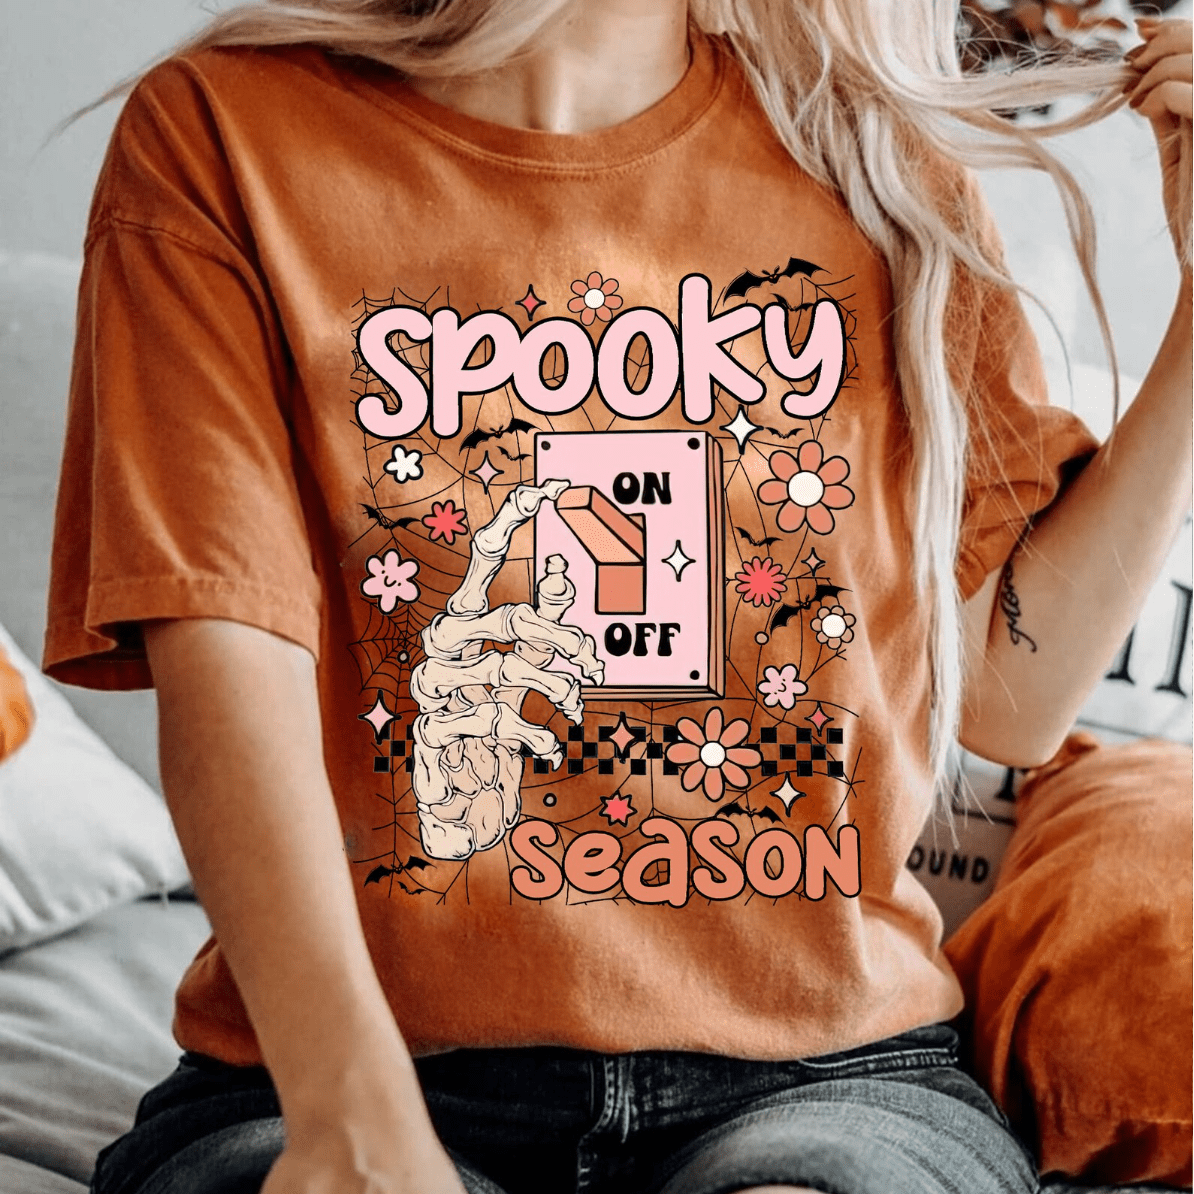 PresentsPrints, Spooky Season On Shirt Design Halloween T-Shirt